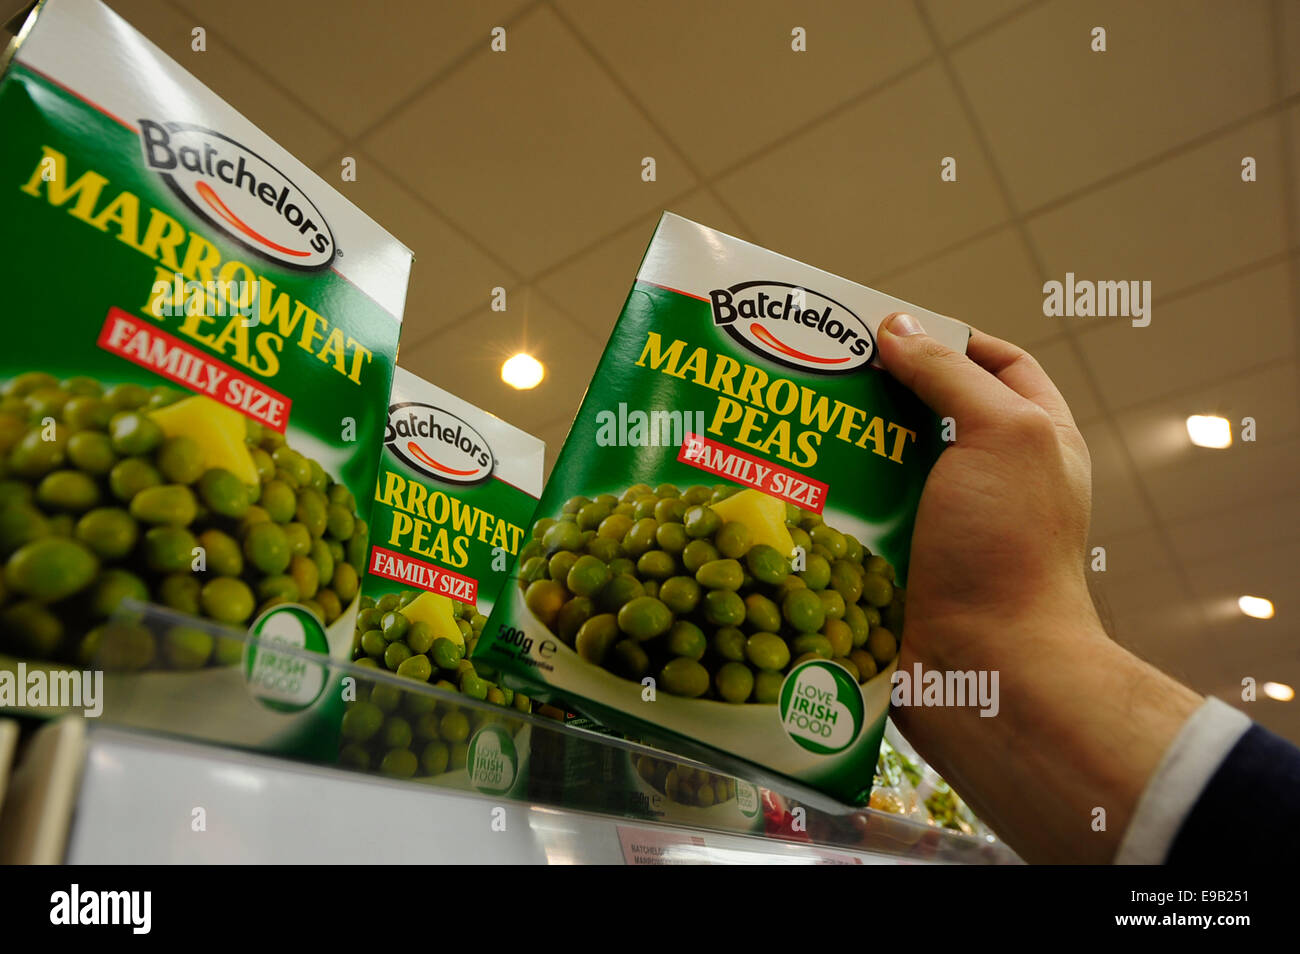 Batchelors marrowfat peas been taken from the shelf (Newscast)(Model Released) Stock Photo